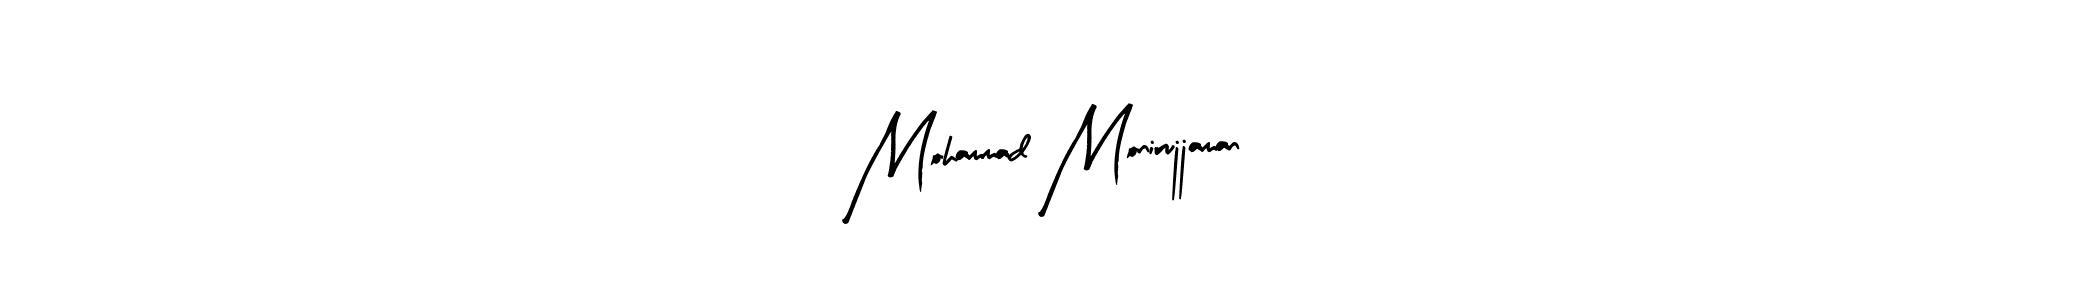 How to Draw Mohammad Monirujjaman signature style? Arty Signature is a latest design signature styles for name Mohammad Monirujjaman. Mohammad Monirujjaman signature style 8 images and pictures png